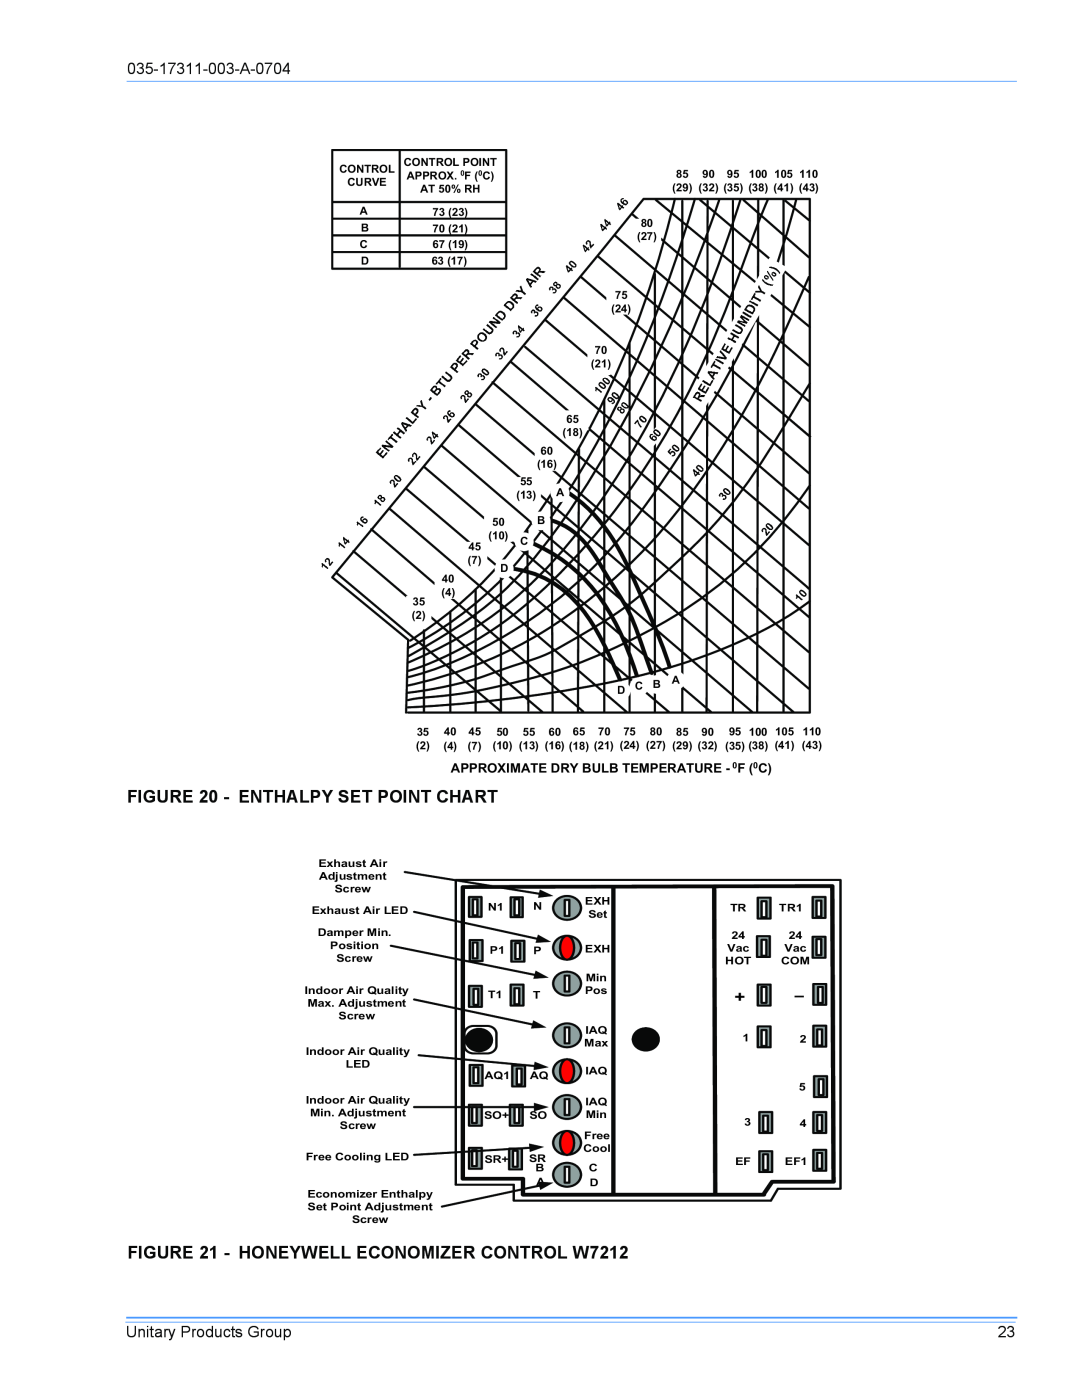 York DM090 installation manual Enthalpy Set Point Chart, HONEYWELL ECONOMIZER CONTROL W7212 